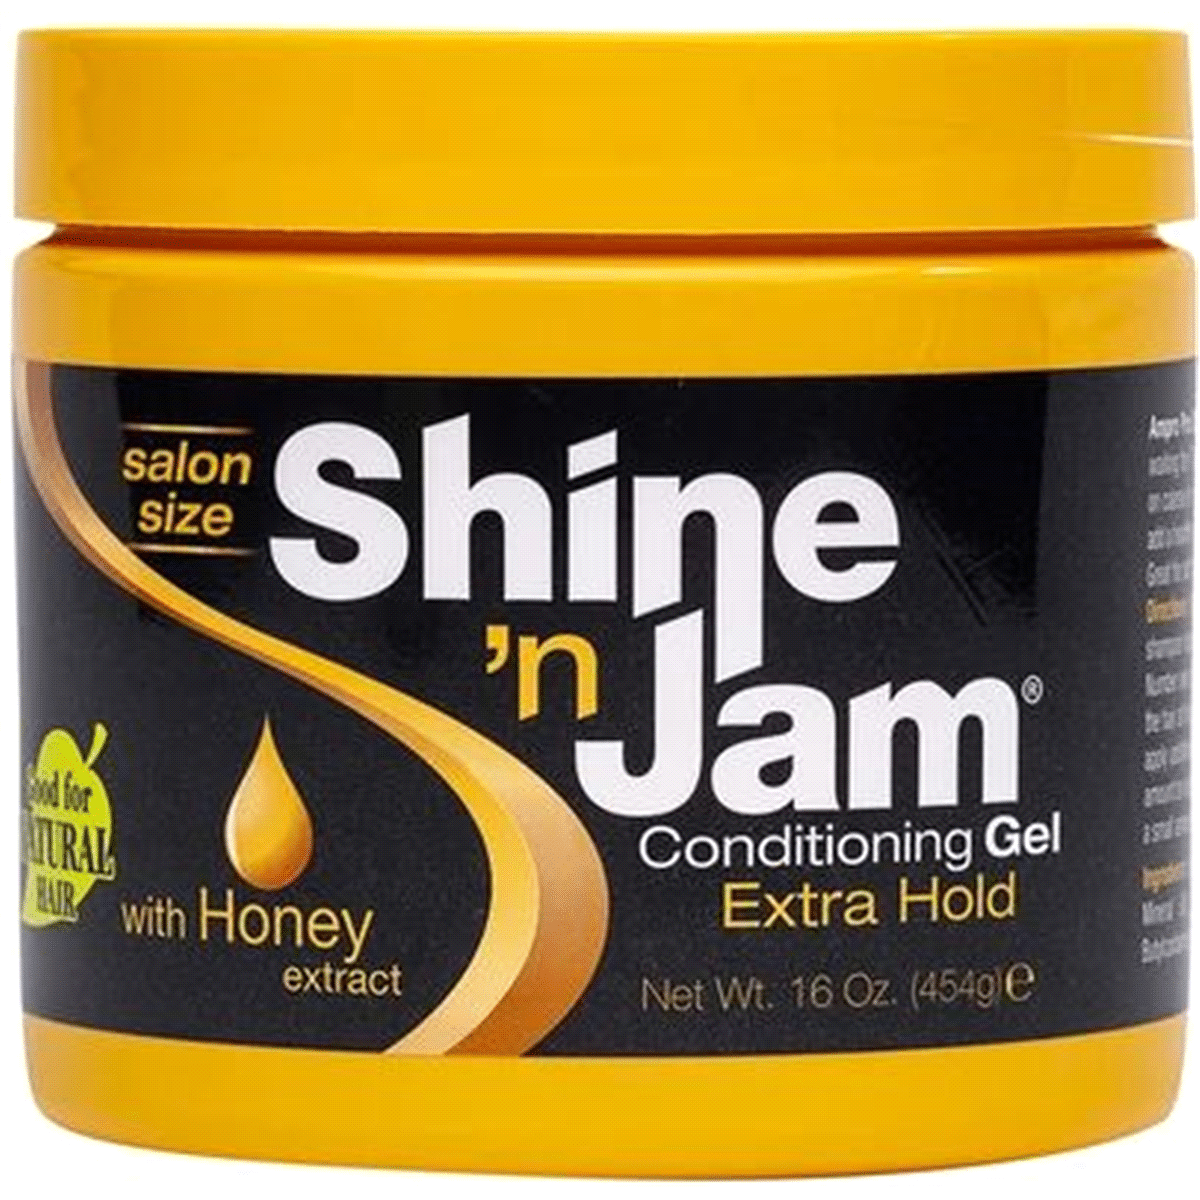 Shine 'n Jam ® Conditioning Gel Extra Hold, 16 oz. #01994 - Goldy TV